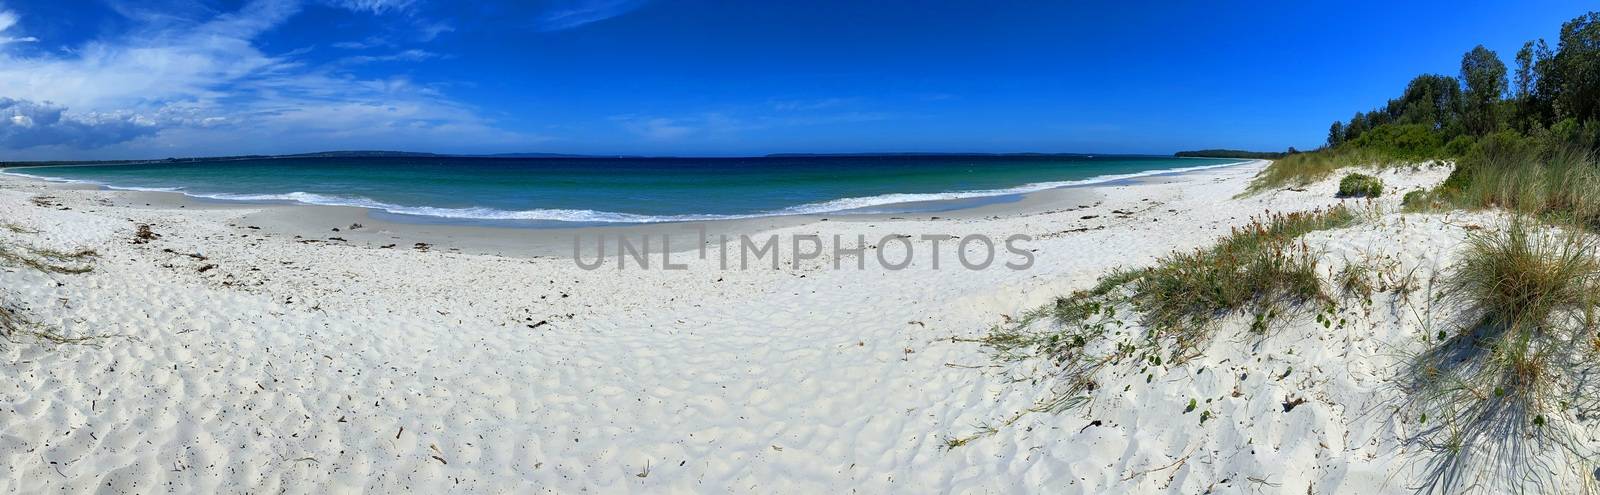 A tropical Australian beach by Binikins